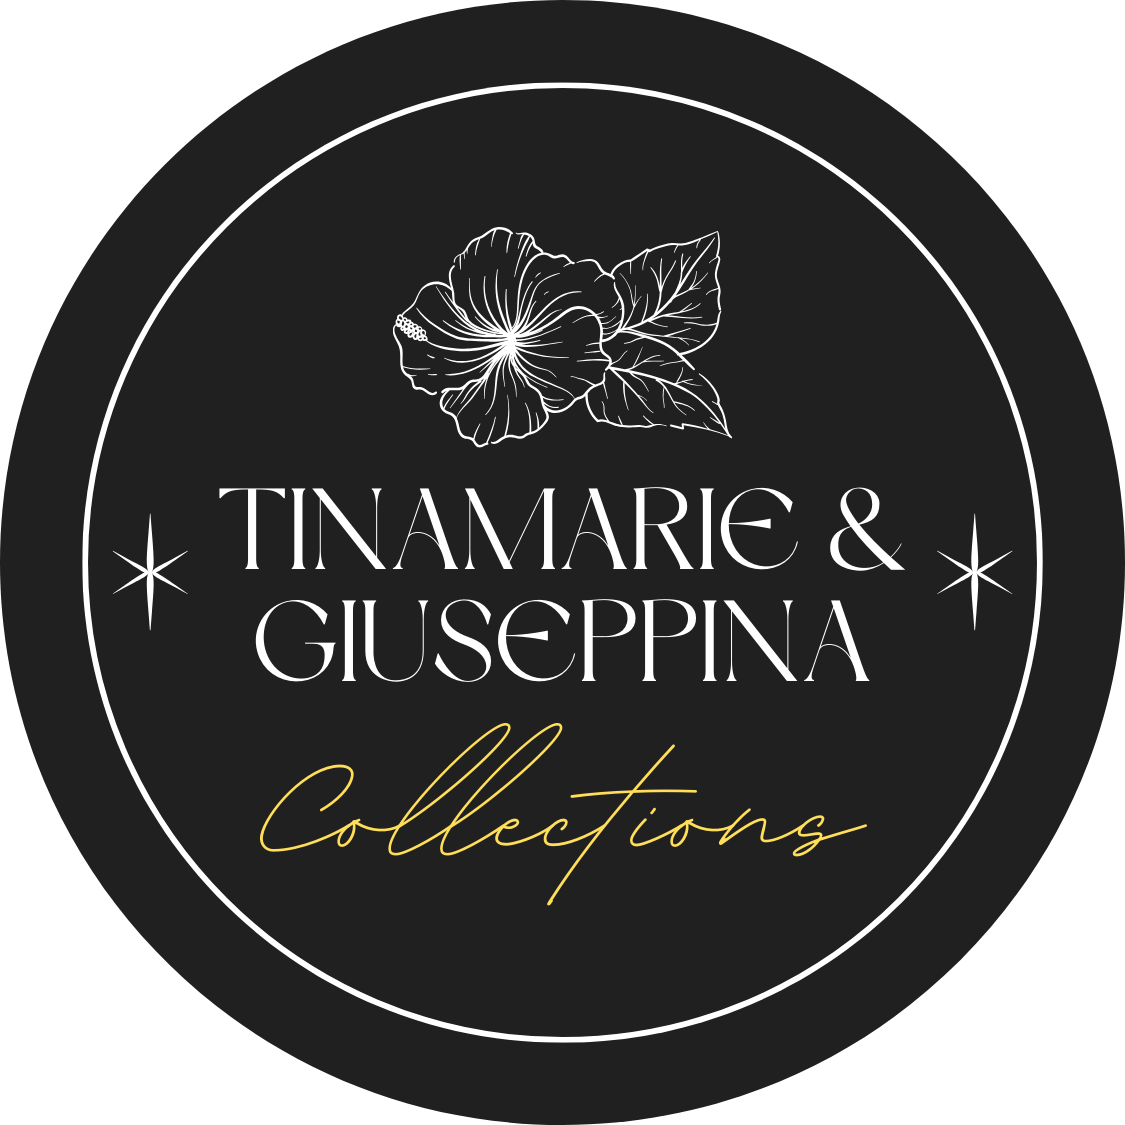 Tinamarie  Giuseppina Collections Fashion Brand